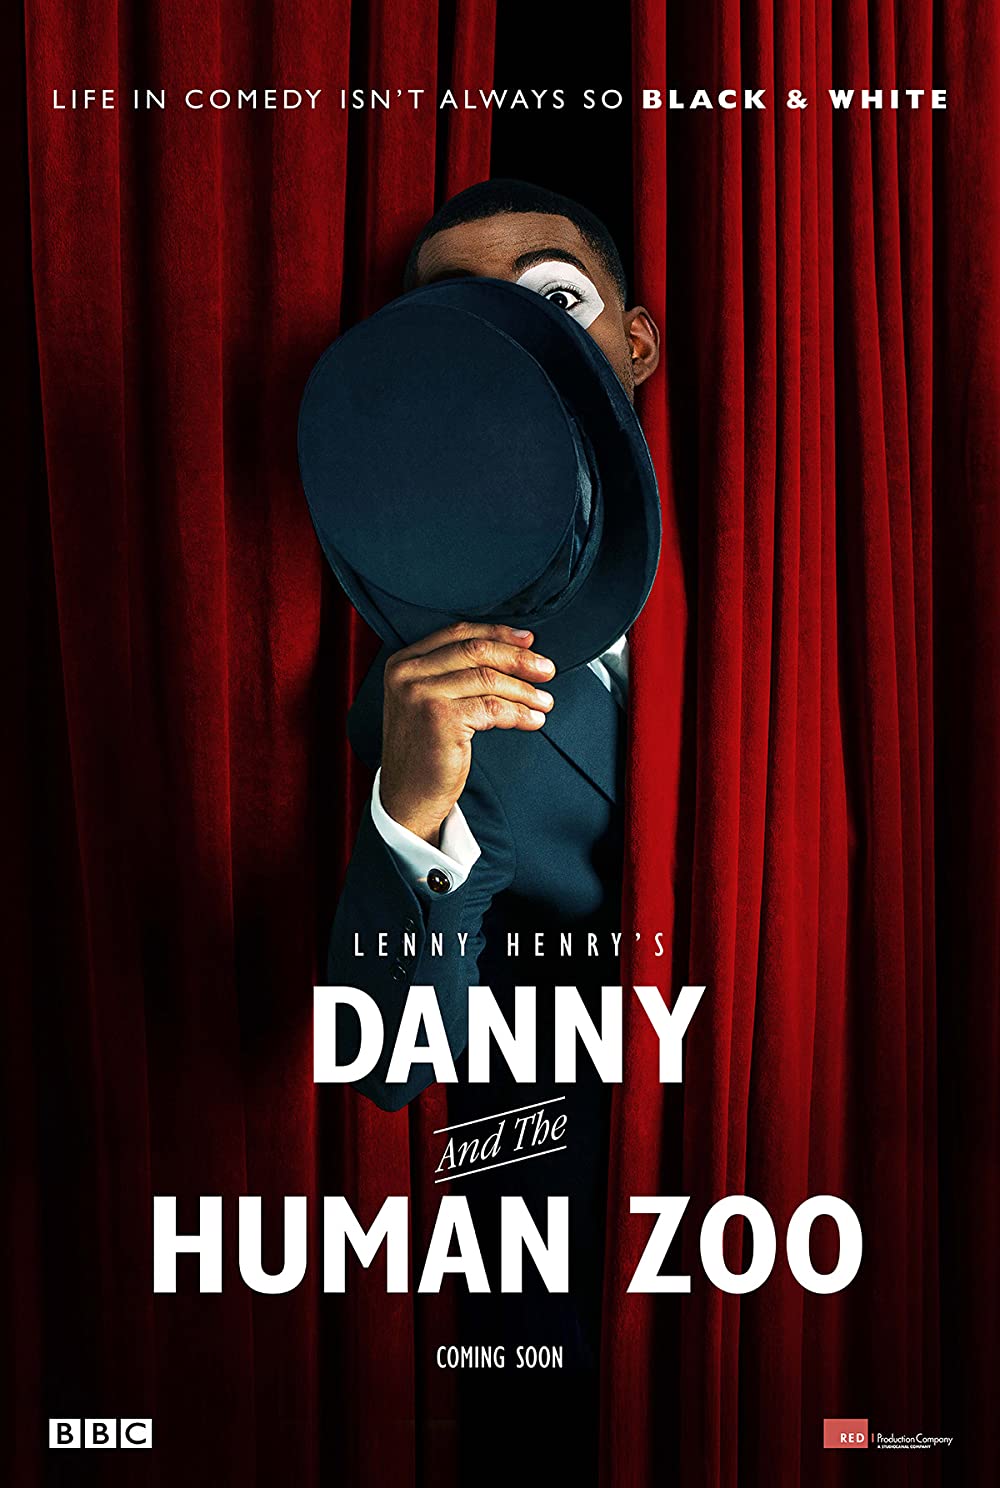 Filmbeschreibung zu Danny and the Human Zoo